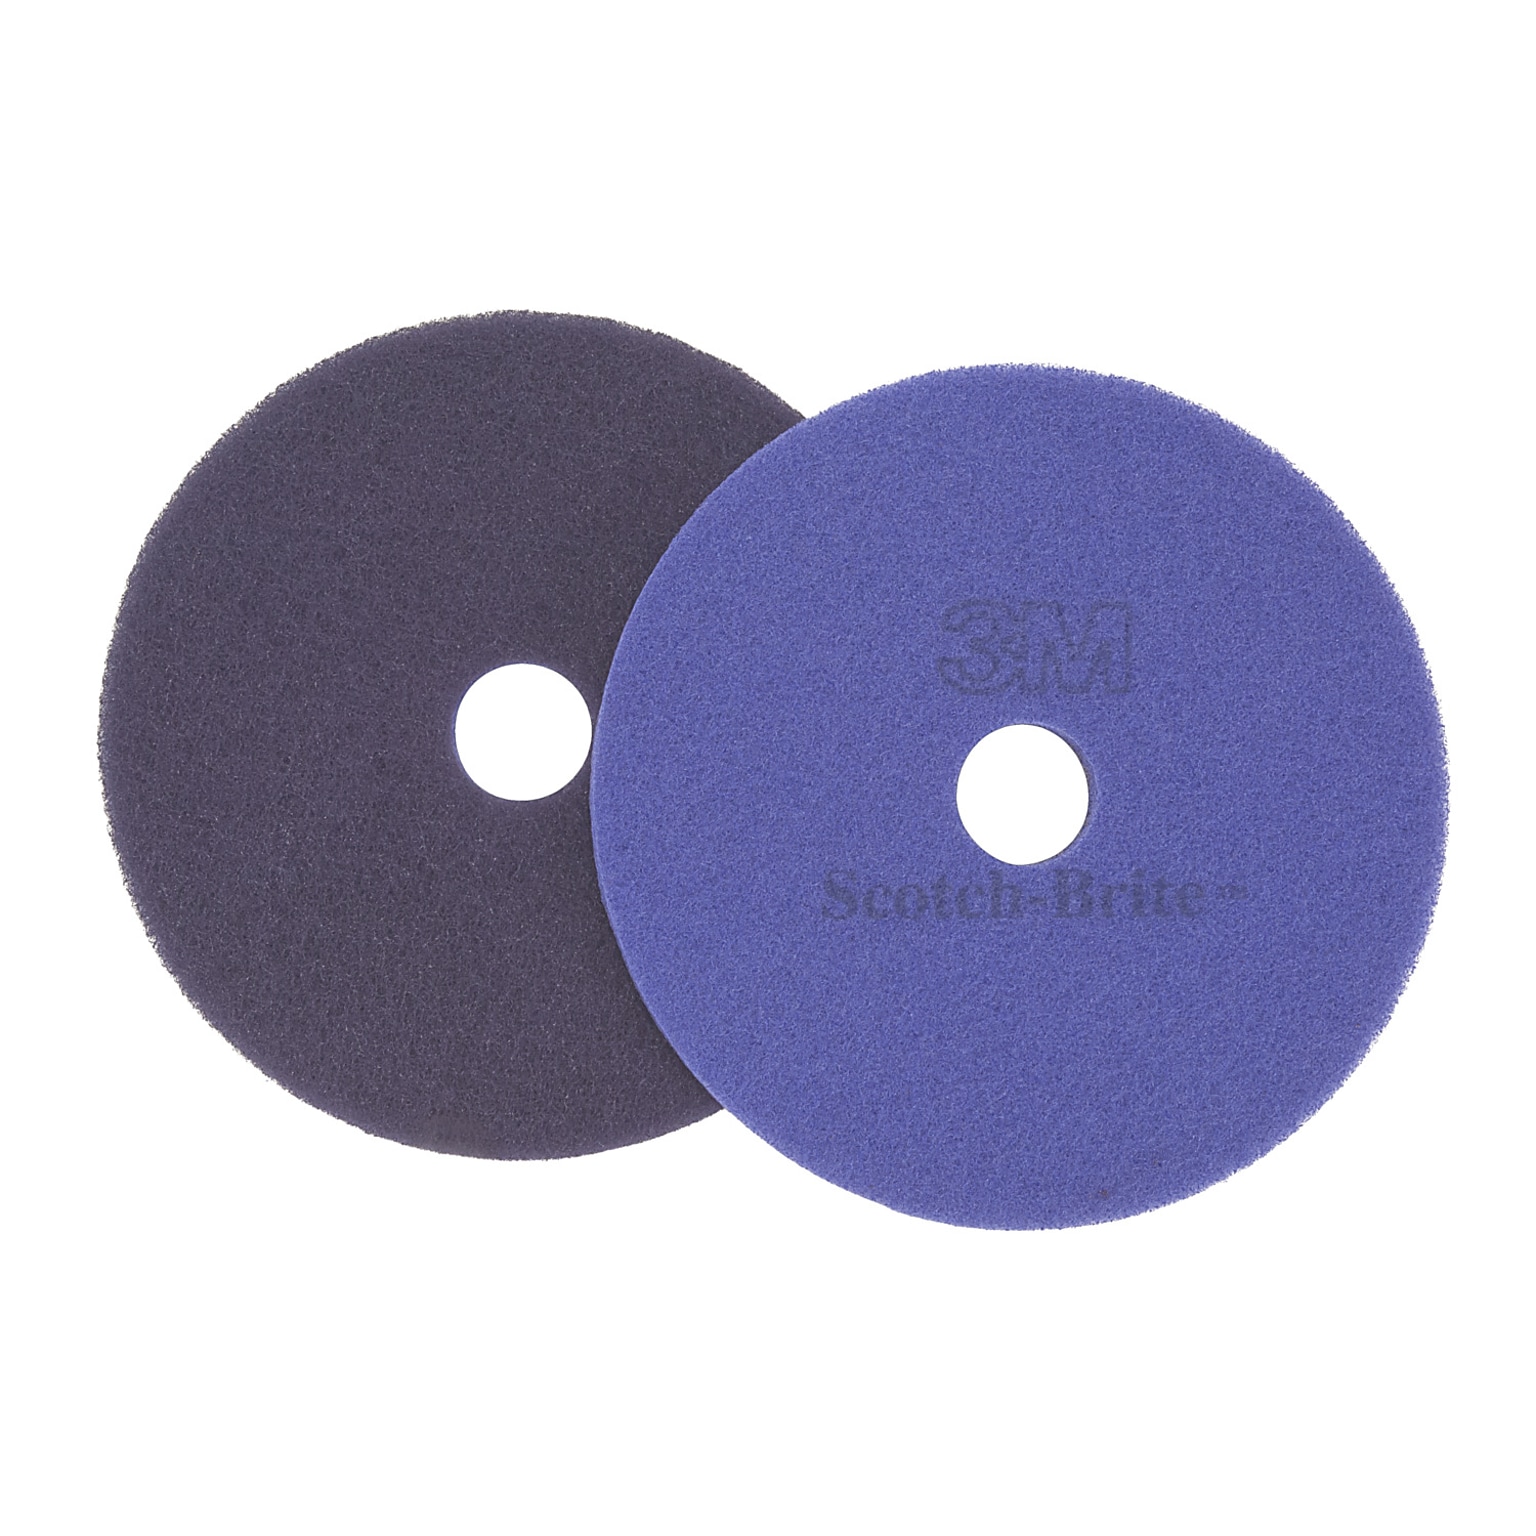 Scotch-Brite 20 Polishing Floor Pad, Purple, 5/Carton (8418)